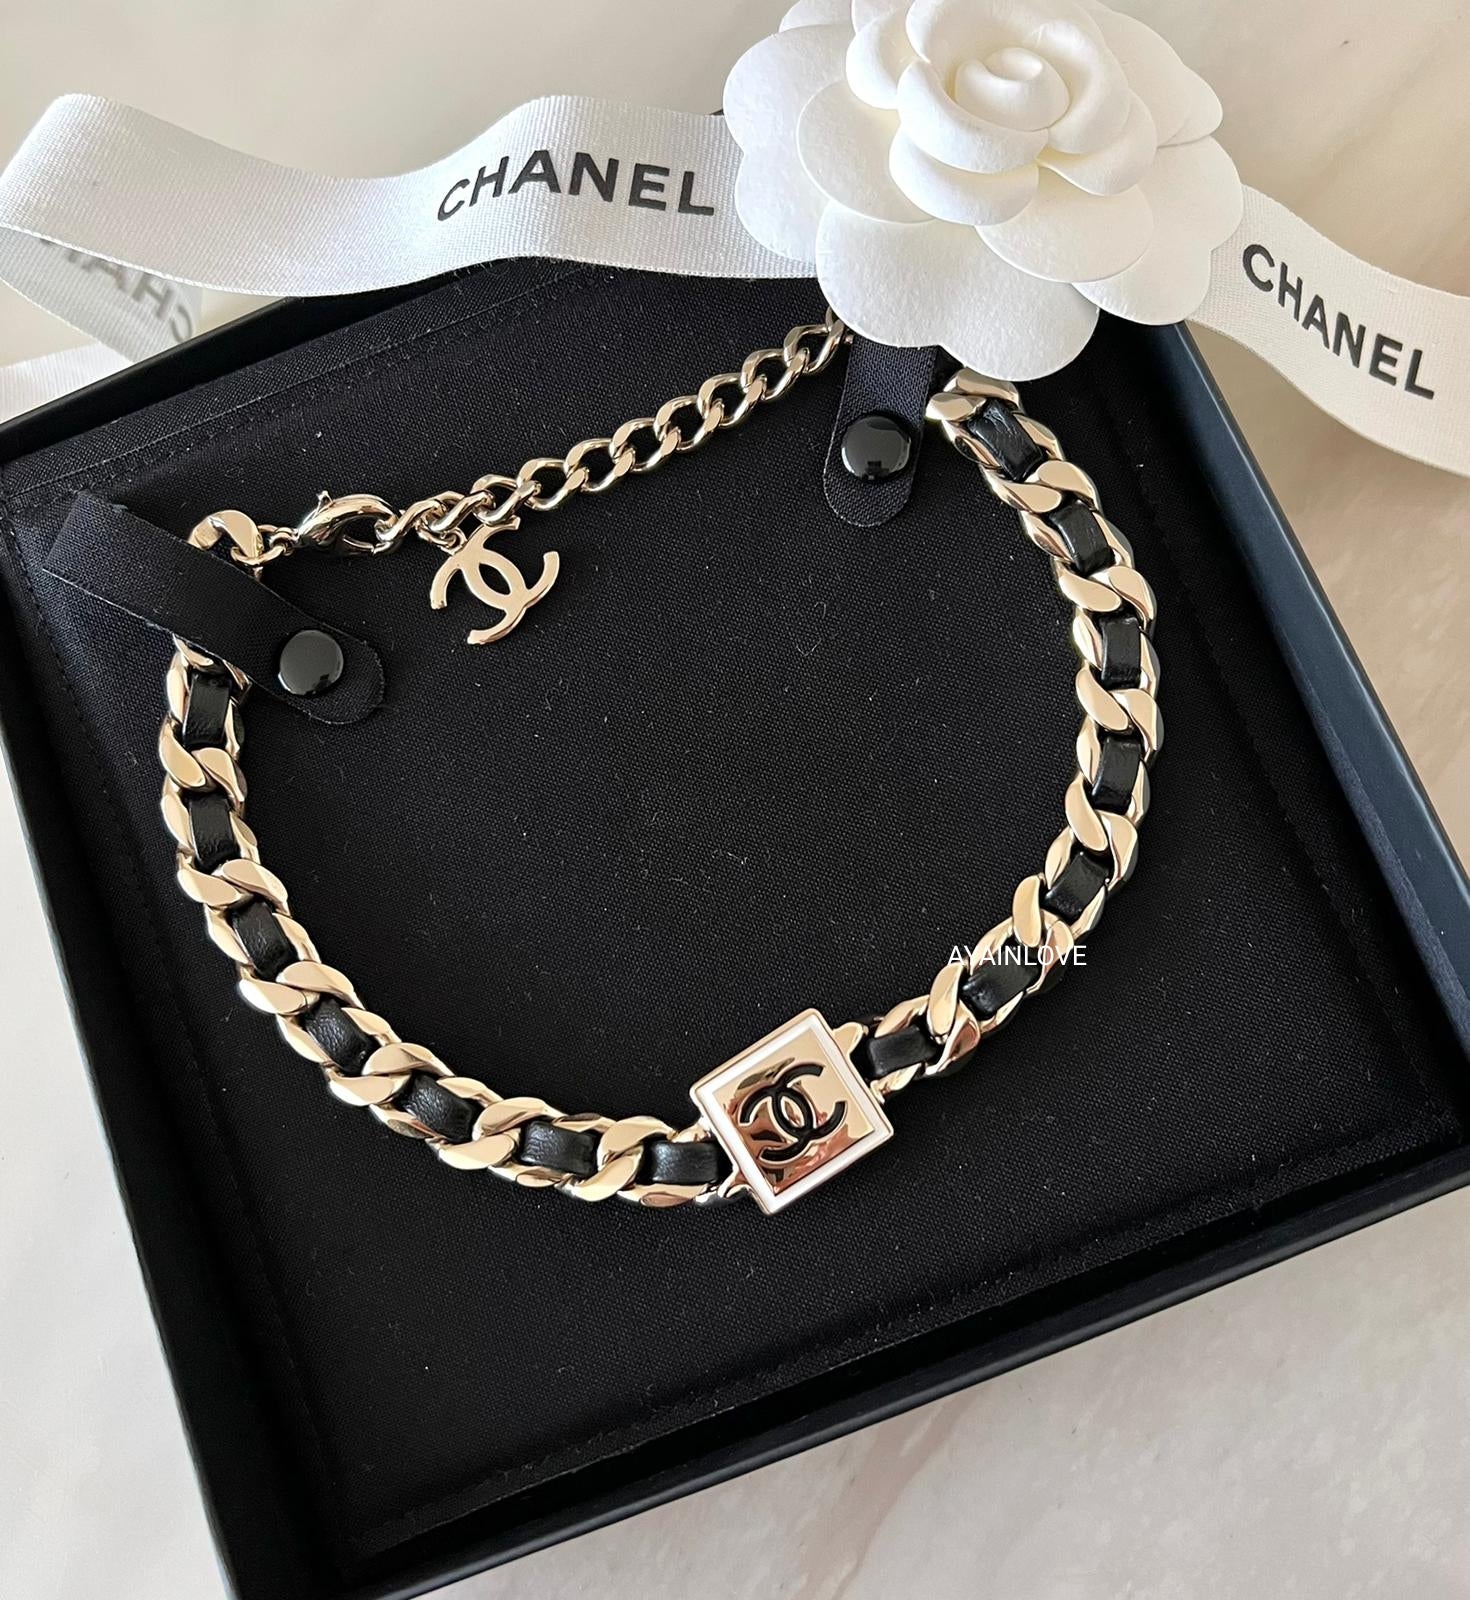 Chanel Necklaces. #fashion #fashionaccessories #fashionoutfits